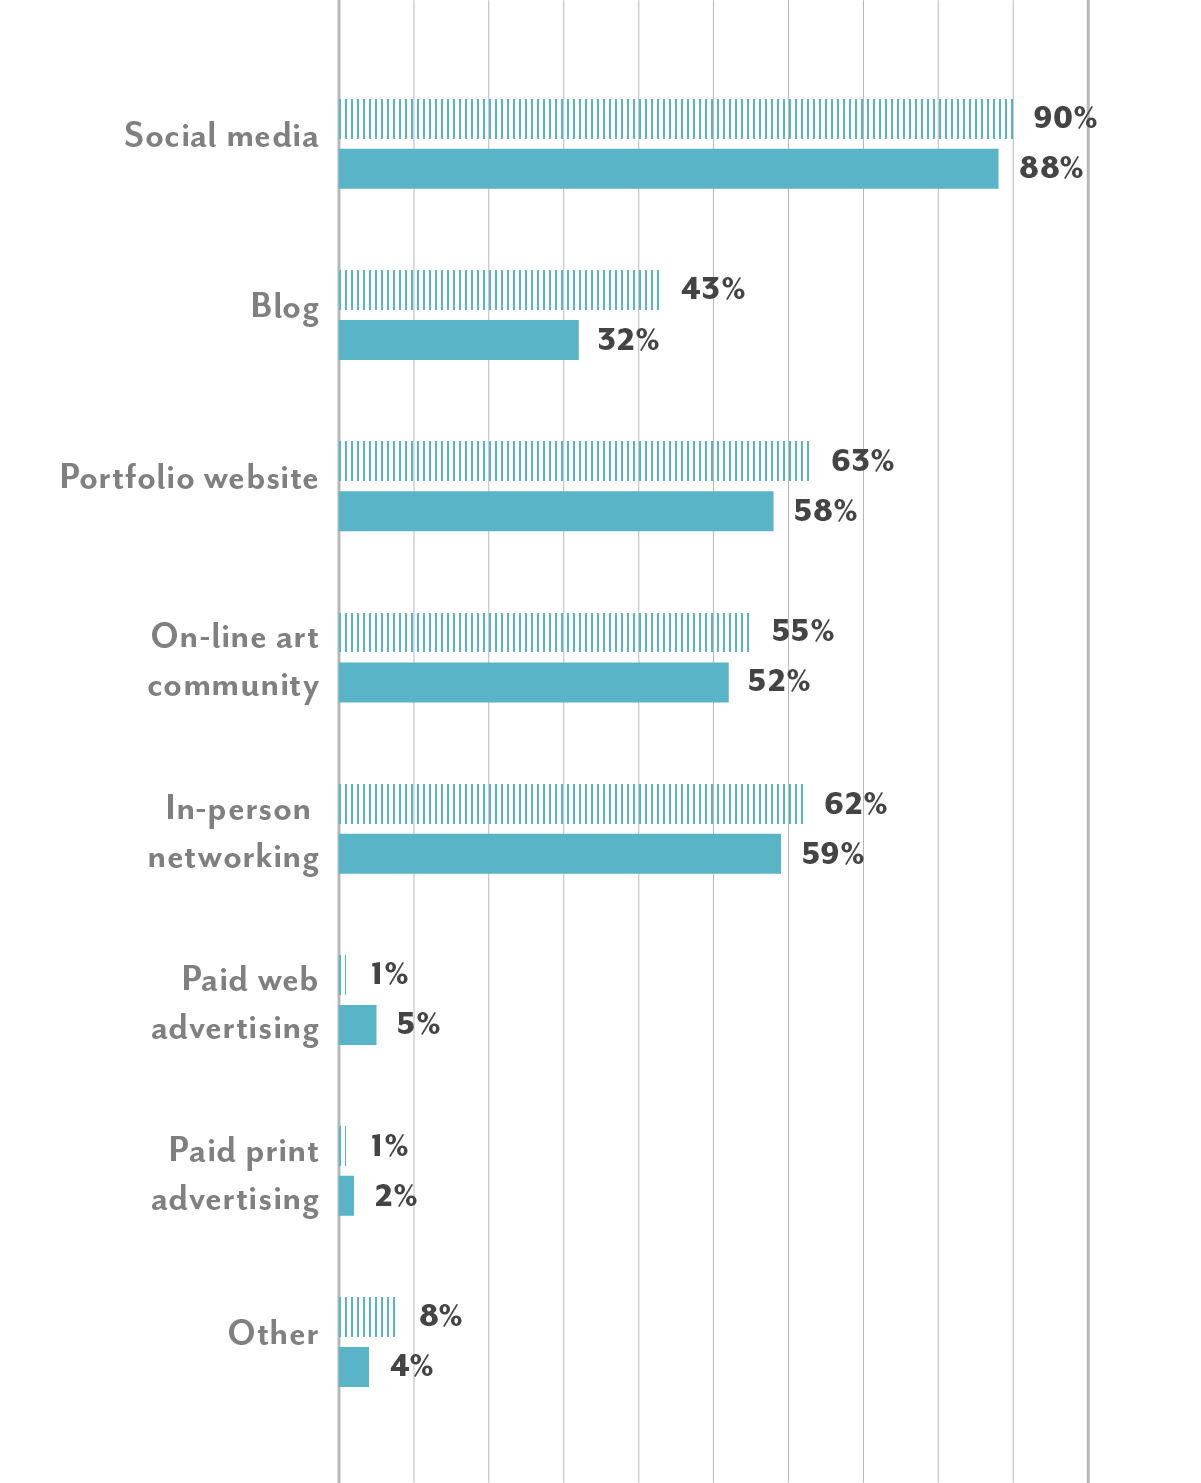 Social media: 88% in 2019. 90% in 2017. Your own blog: 32% in 2019. 43% in 2017. Online portfolio: 58% in 2019. 63% in 2017. Online artist community: 52% in 2019. 55% in 2017. In-person networking: 59% in 2019. 62% in 2017. Pay for online advertising: 5% in 2019. 1% in 2017. Pay for print advertising: 2% in 2019. 1% in 2017. Other: 4% in 2019. 8% in 2017.